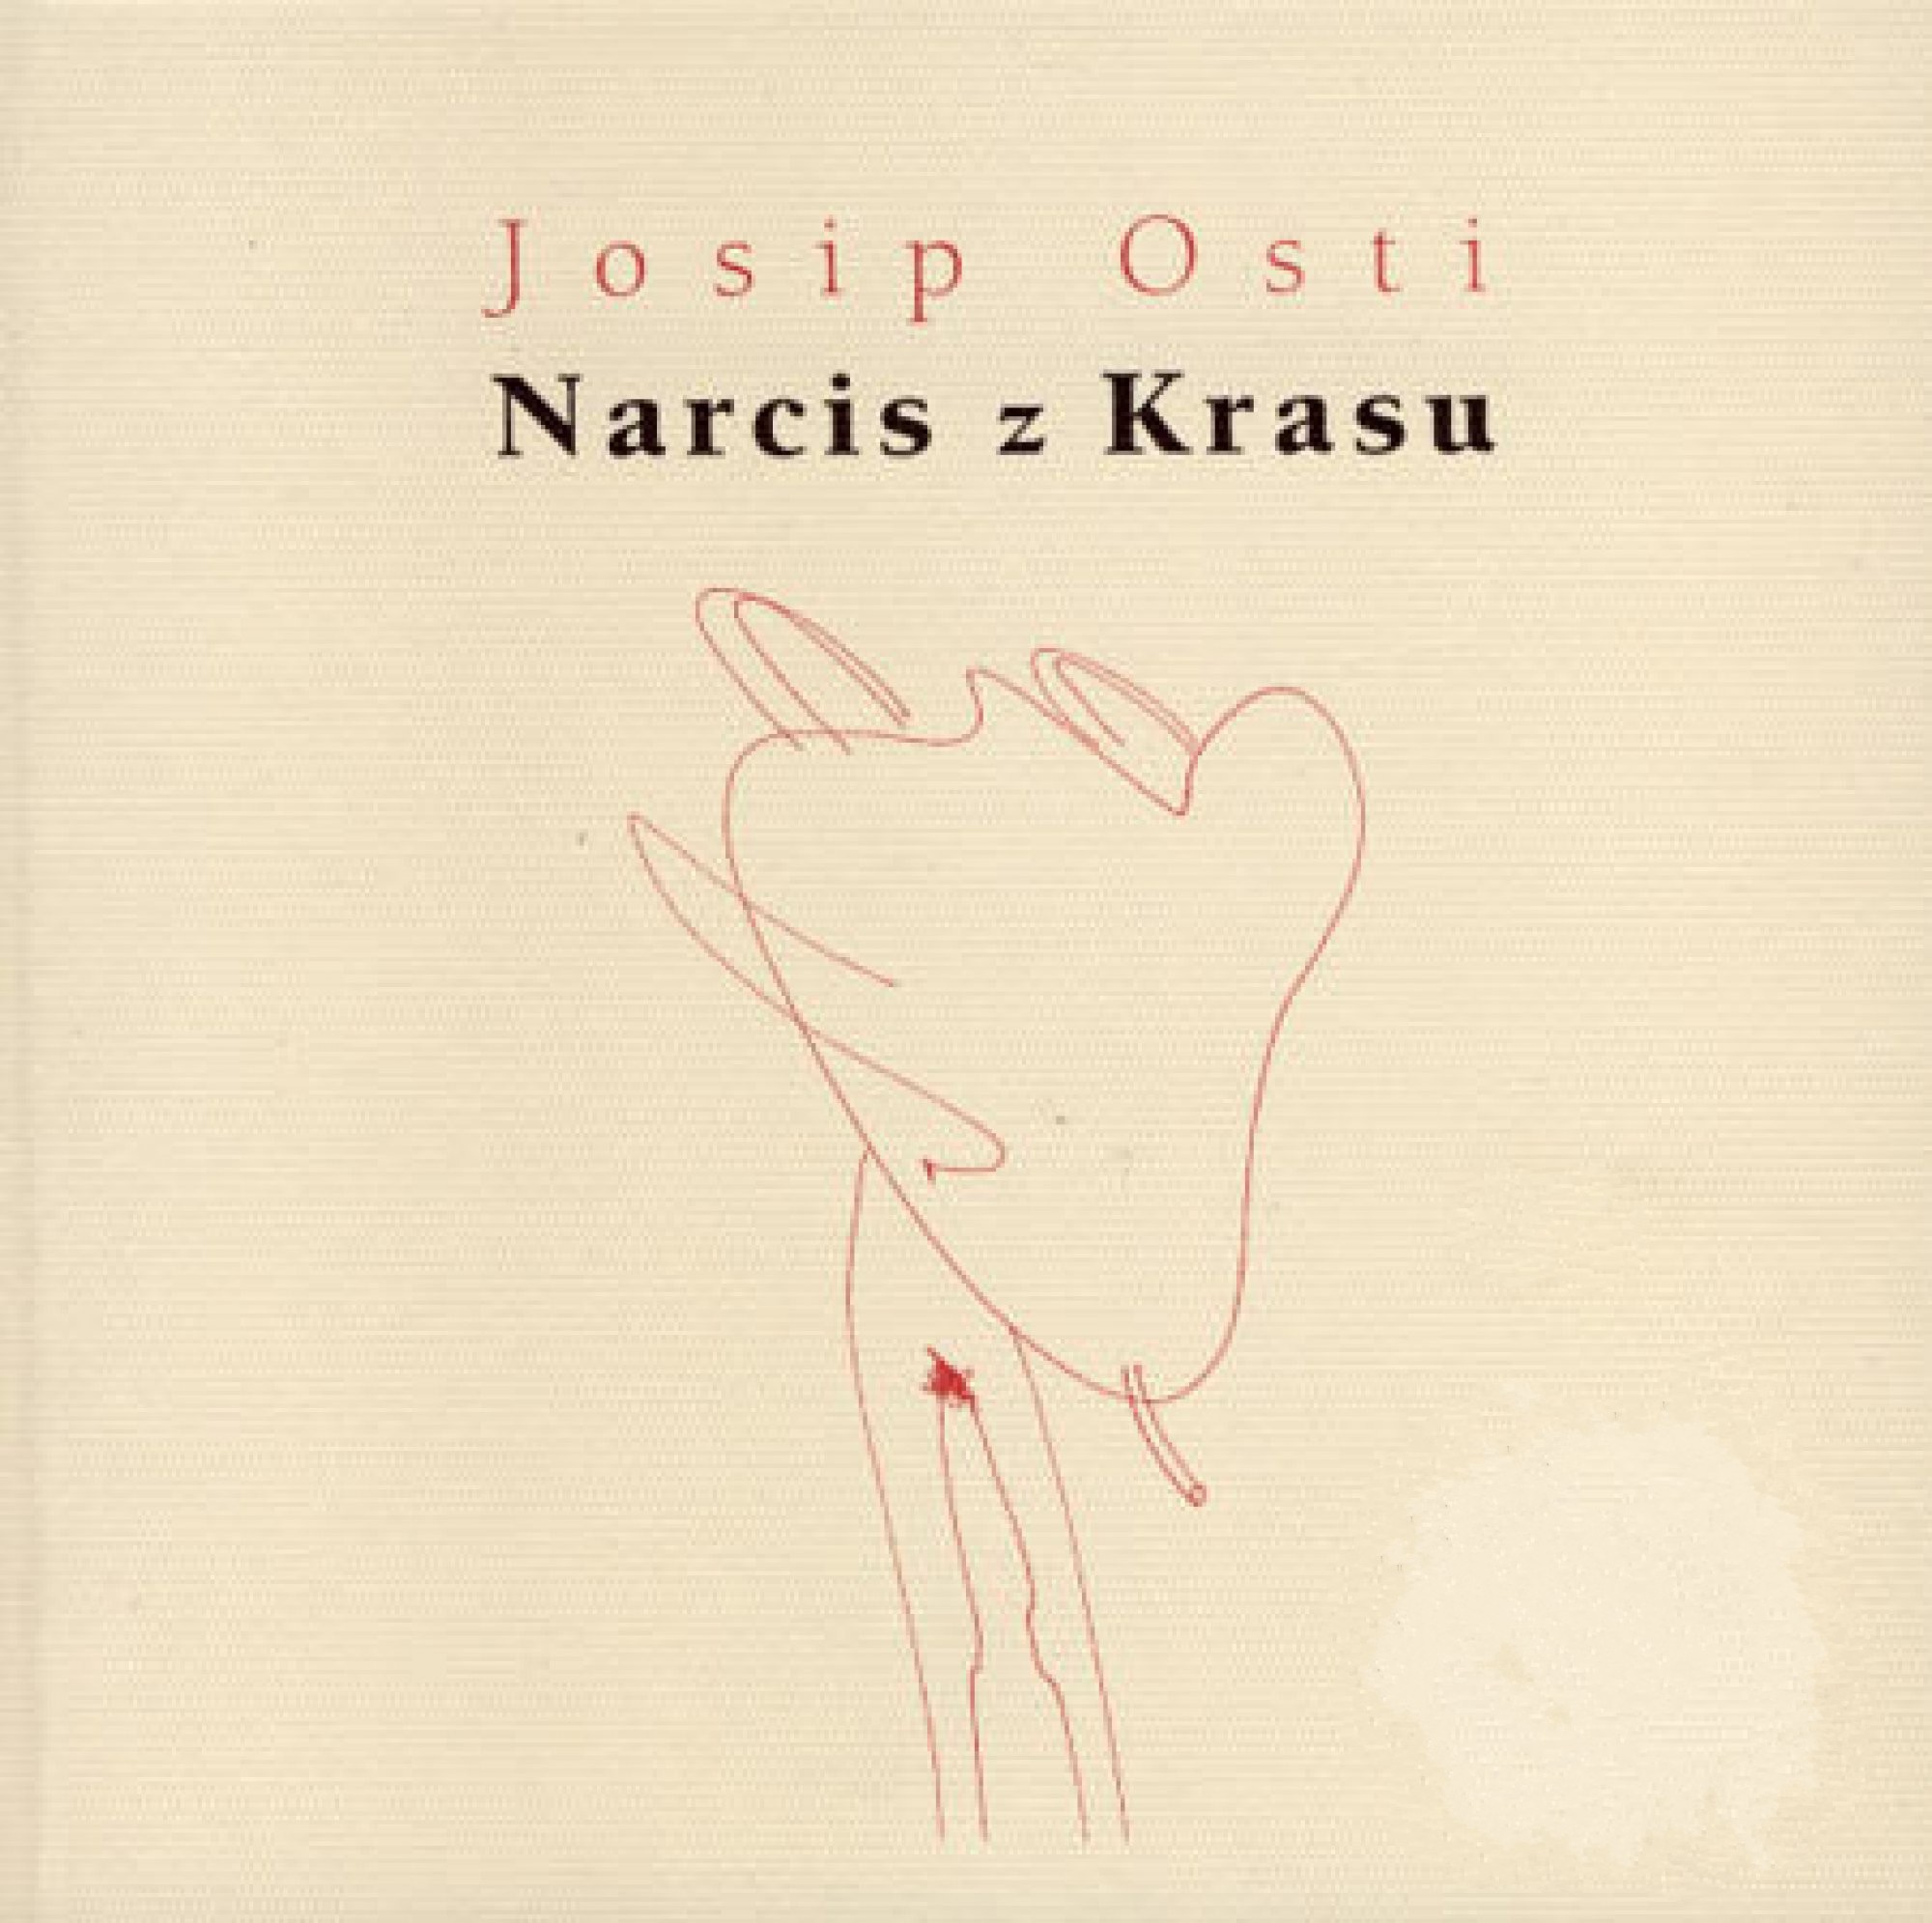 Josip Osti – Narcis z Krasu